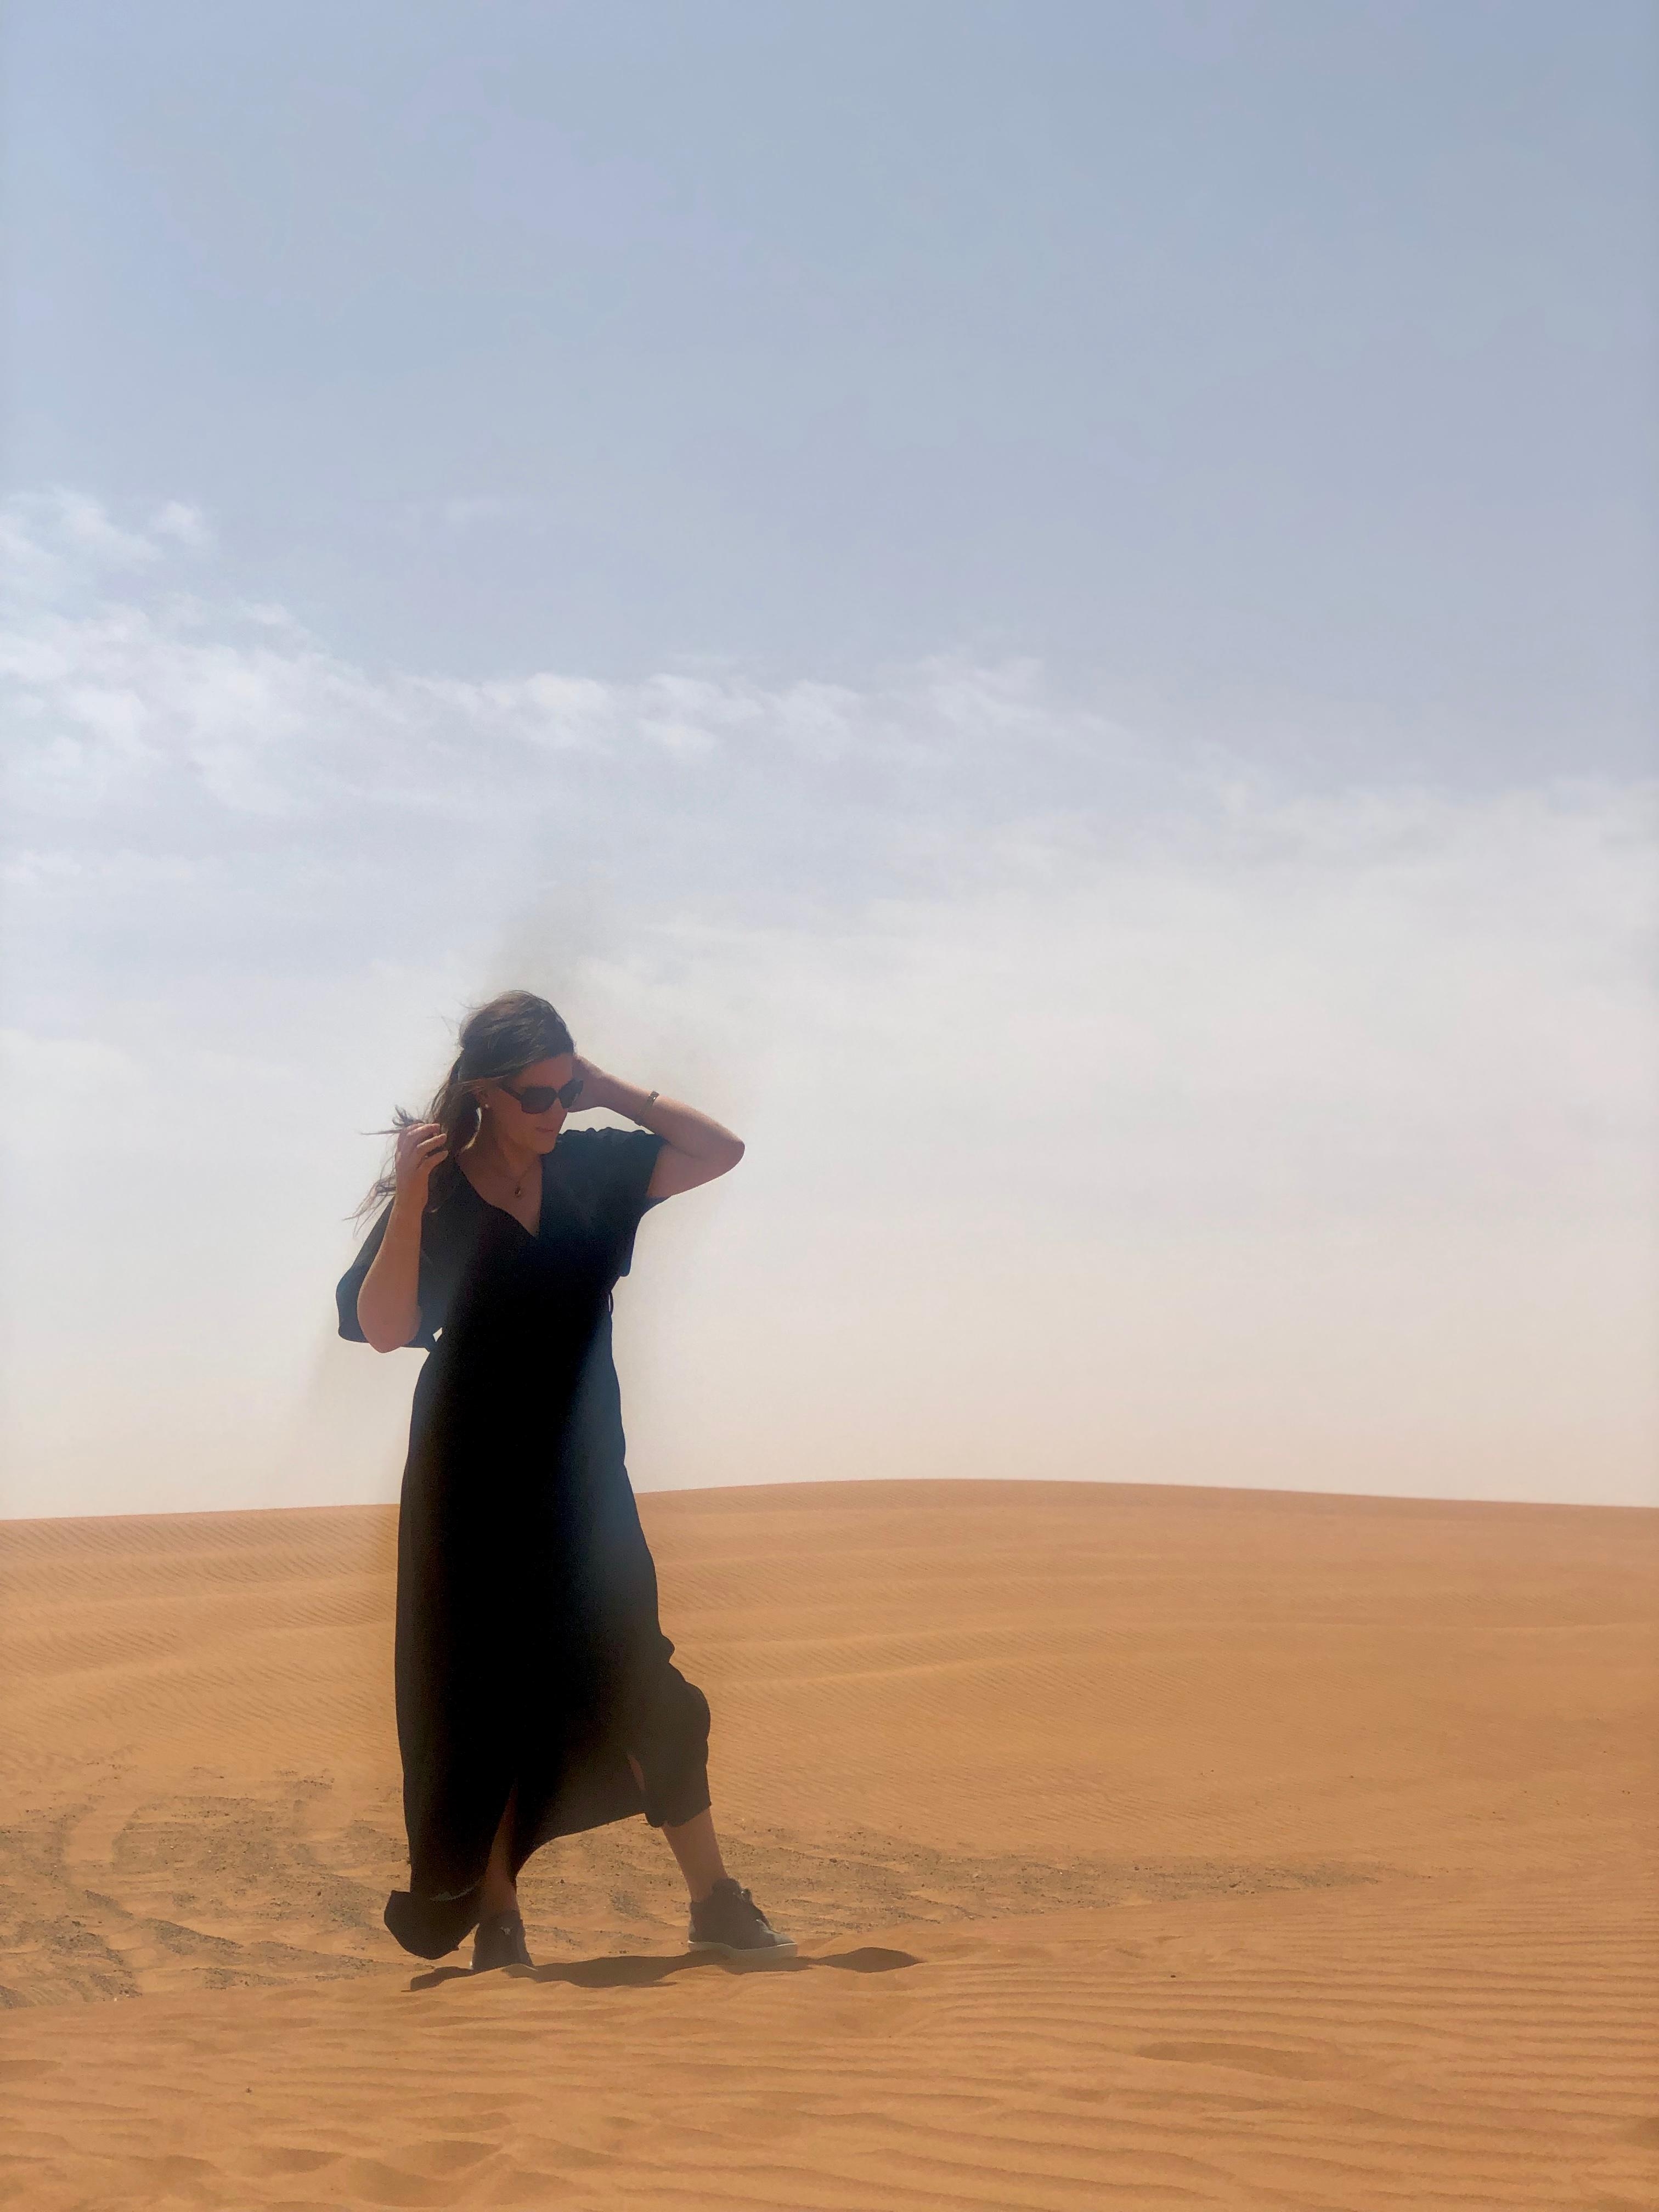 🐪🌴☀️ #wüste #interiorblogger #urlaub #hot #oase #dubai #abudhabi #oman #blackdress